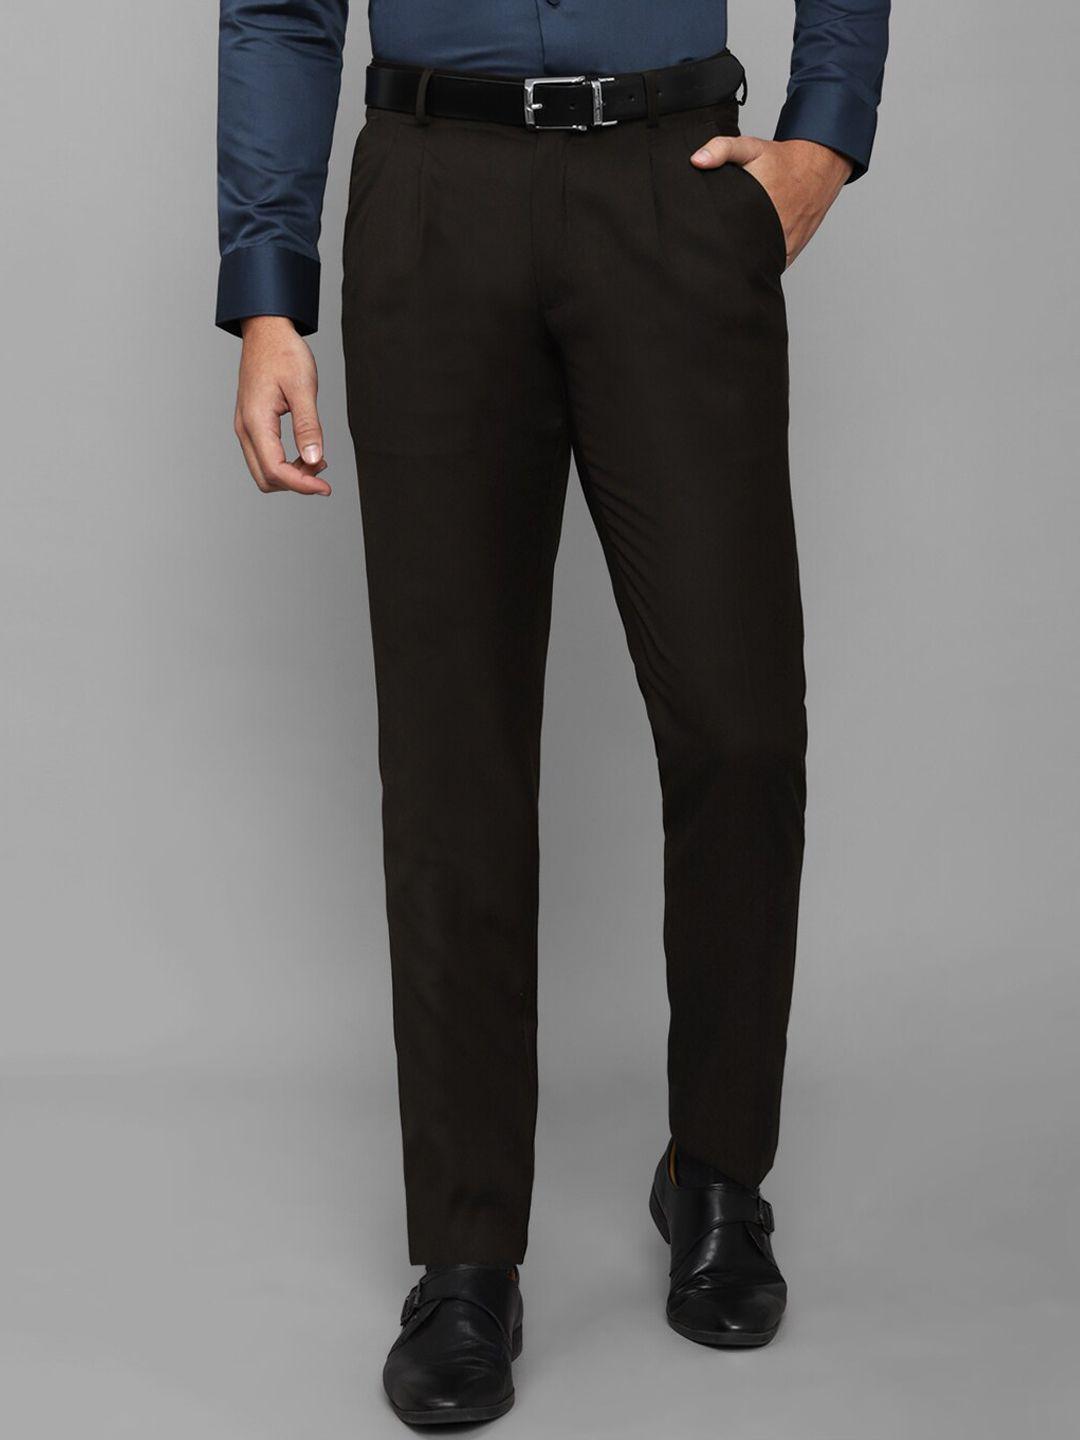 louis-philippe-men-black-pleated-trousers